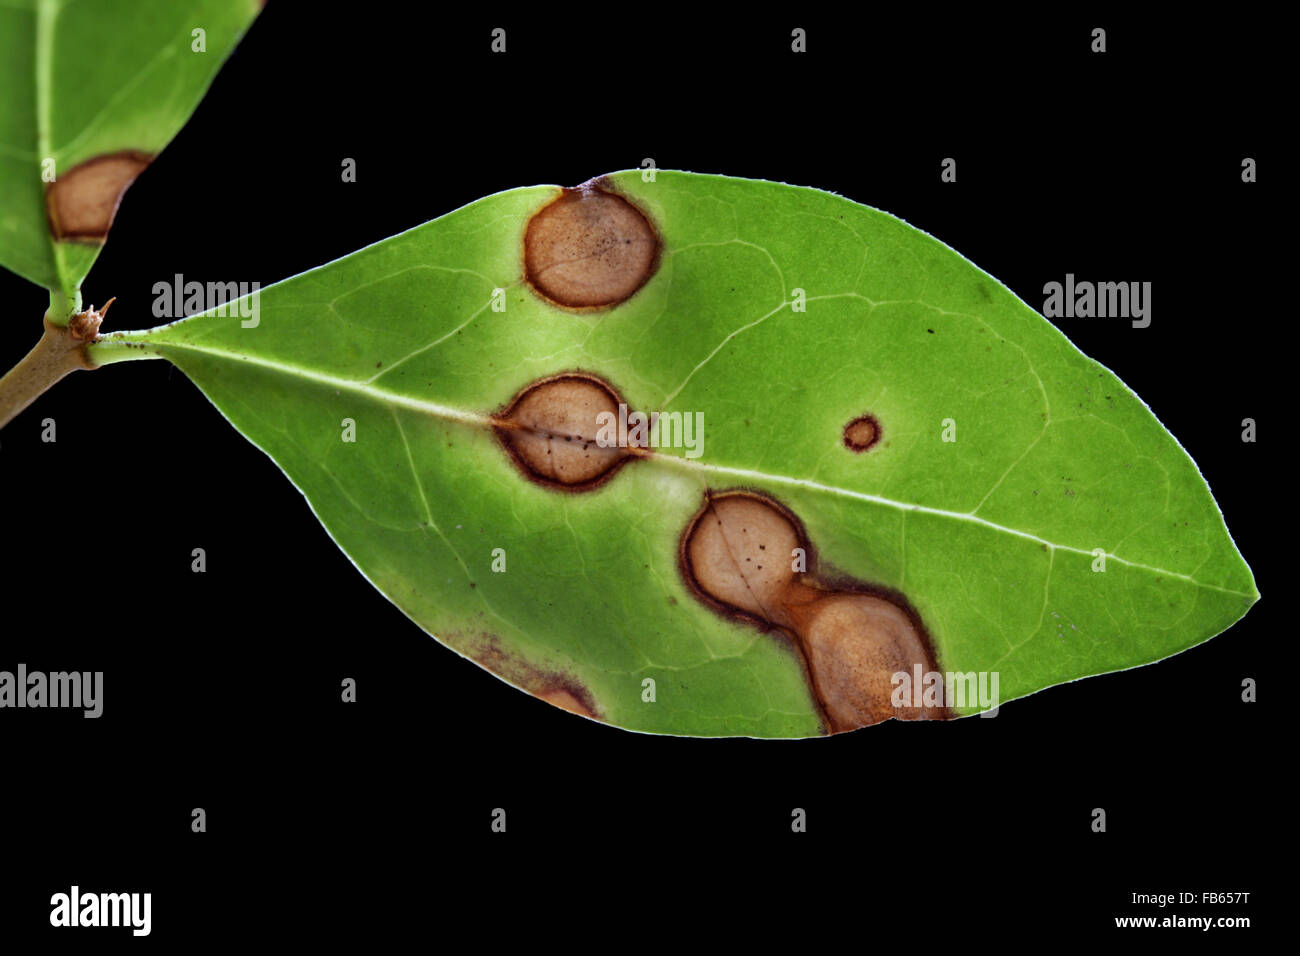 Necrotic leaf spots on a privet (Ligustrum) leaf, probably caused by Cercospora sp. fungus. Stock Photo